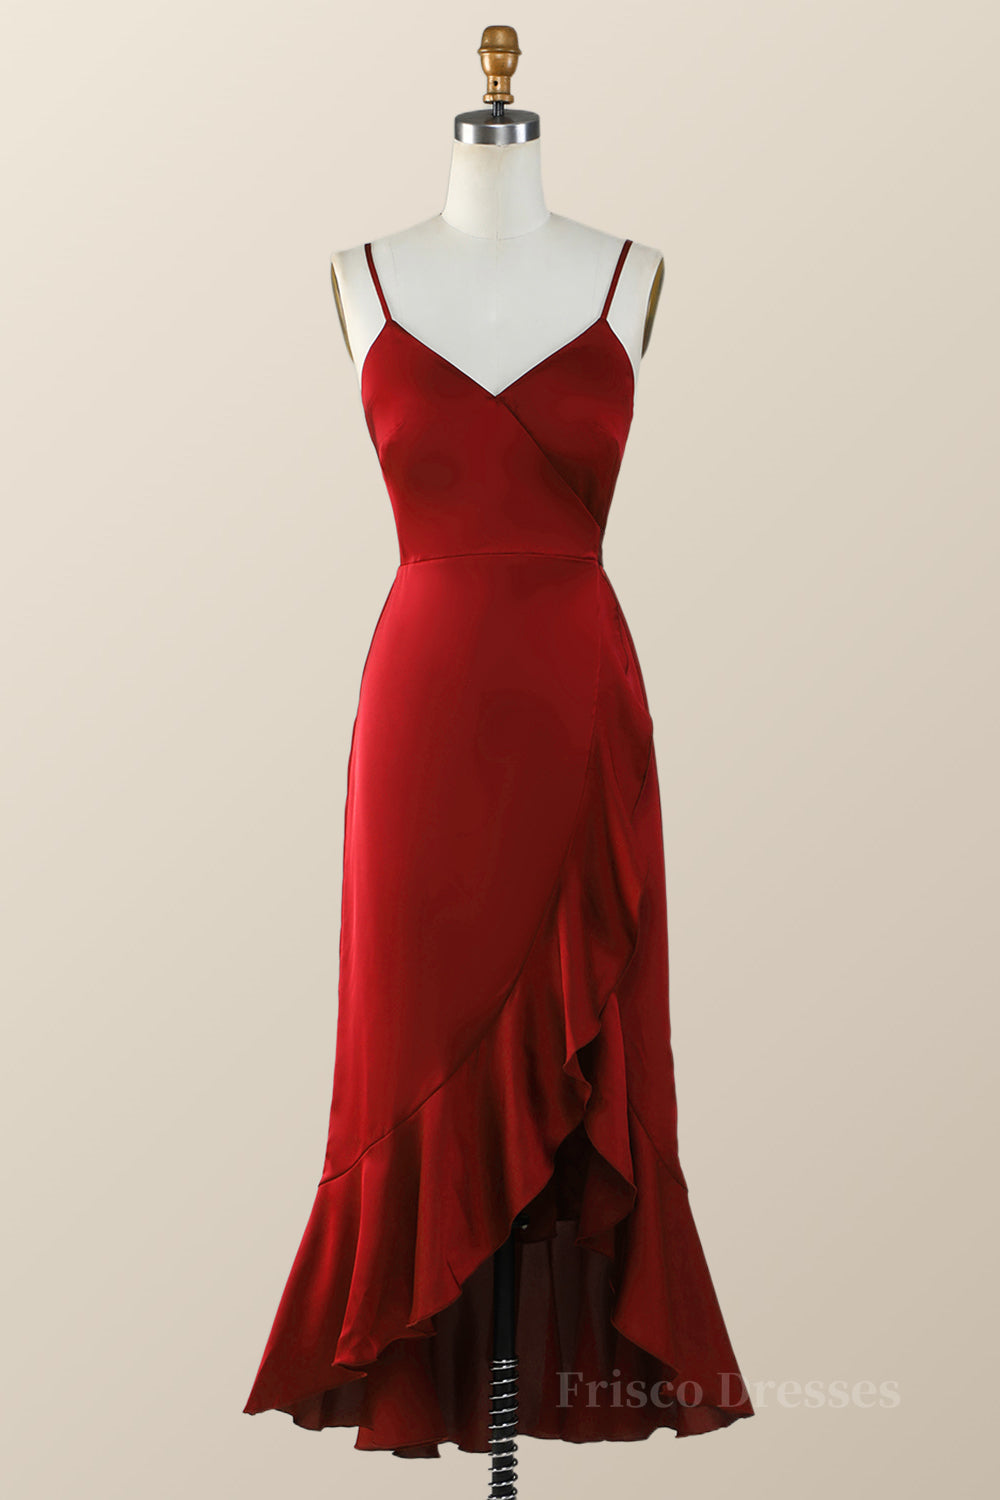 Straps Red Faux Wrap Ruffle Bridesmaid Dress